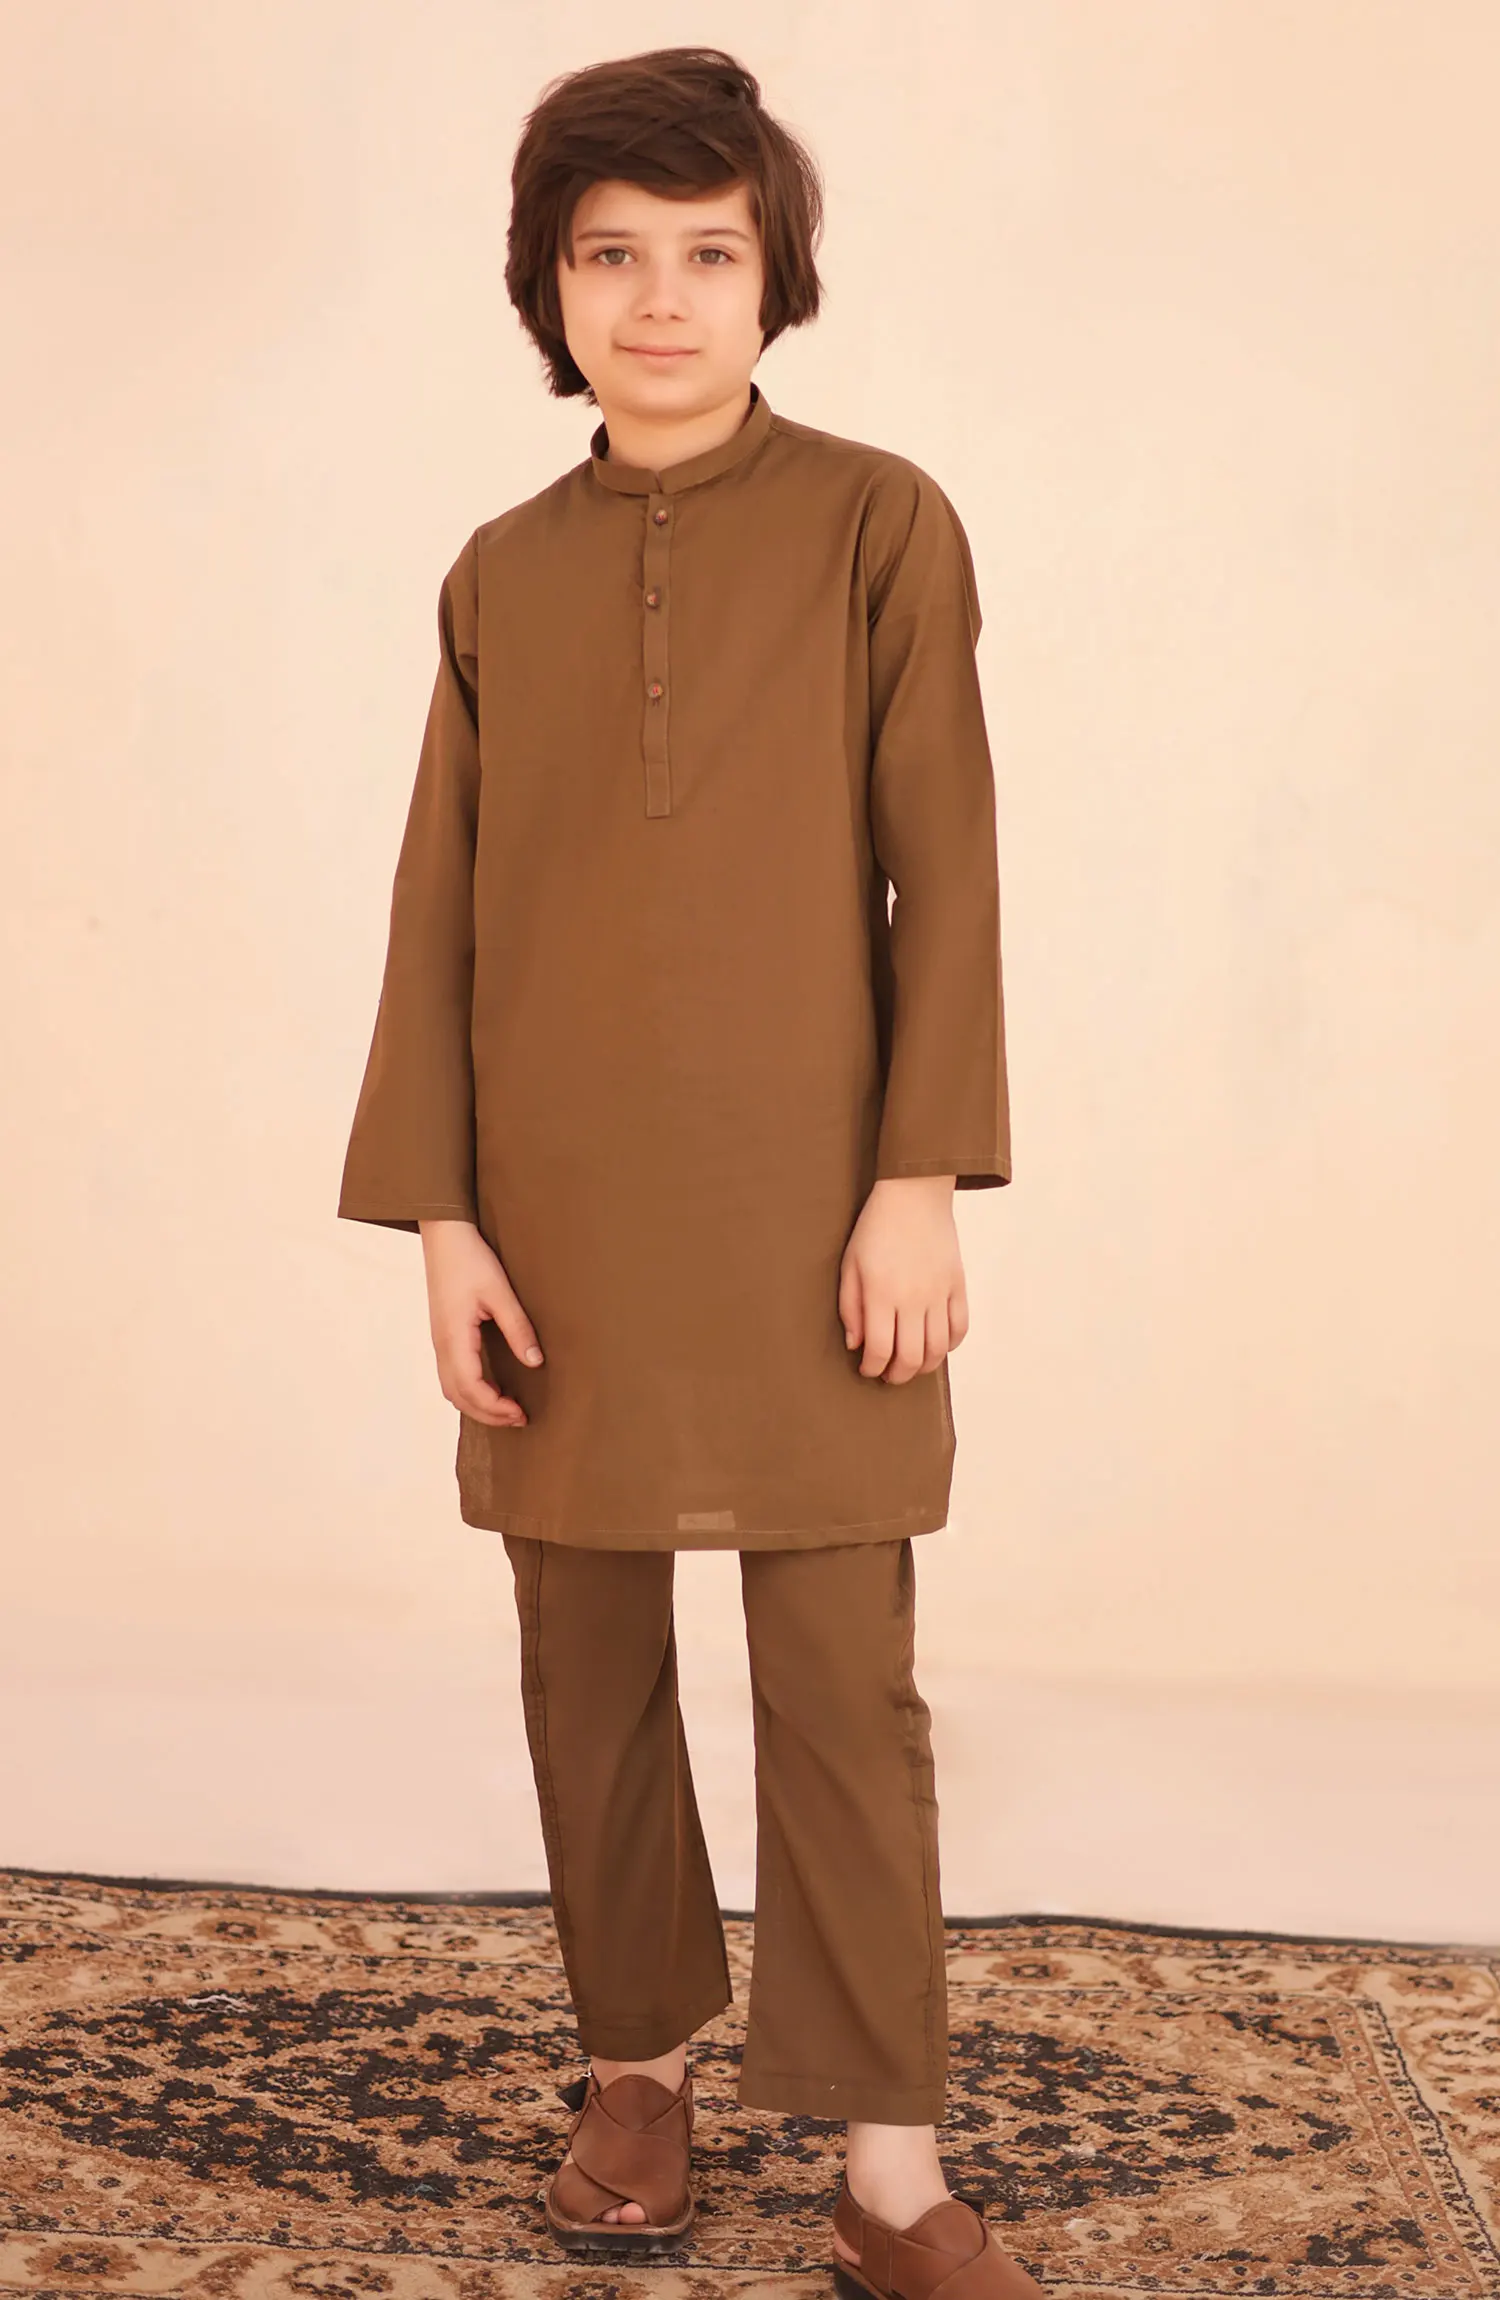 Ramazan Edit Kurta Trouser Collection By Hassan Jee - KT 29 Russet Brown Kurta Trouser